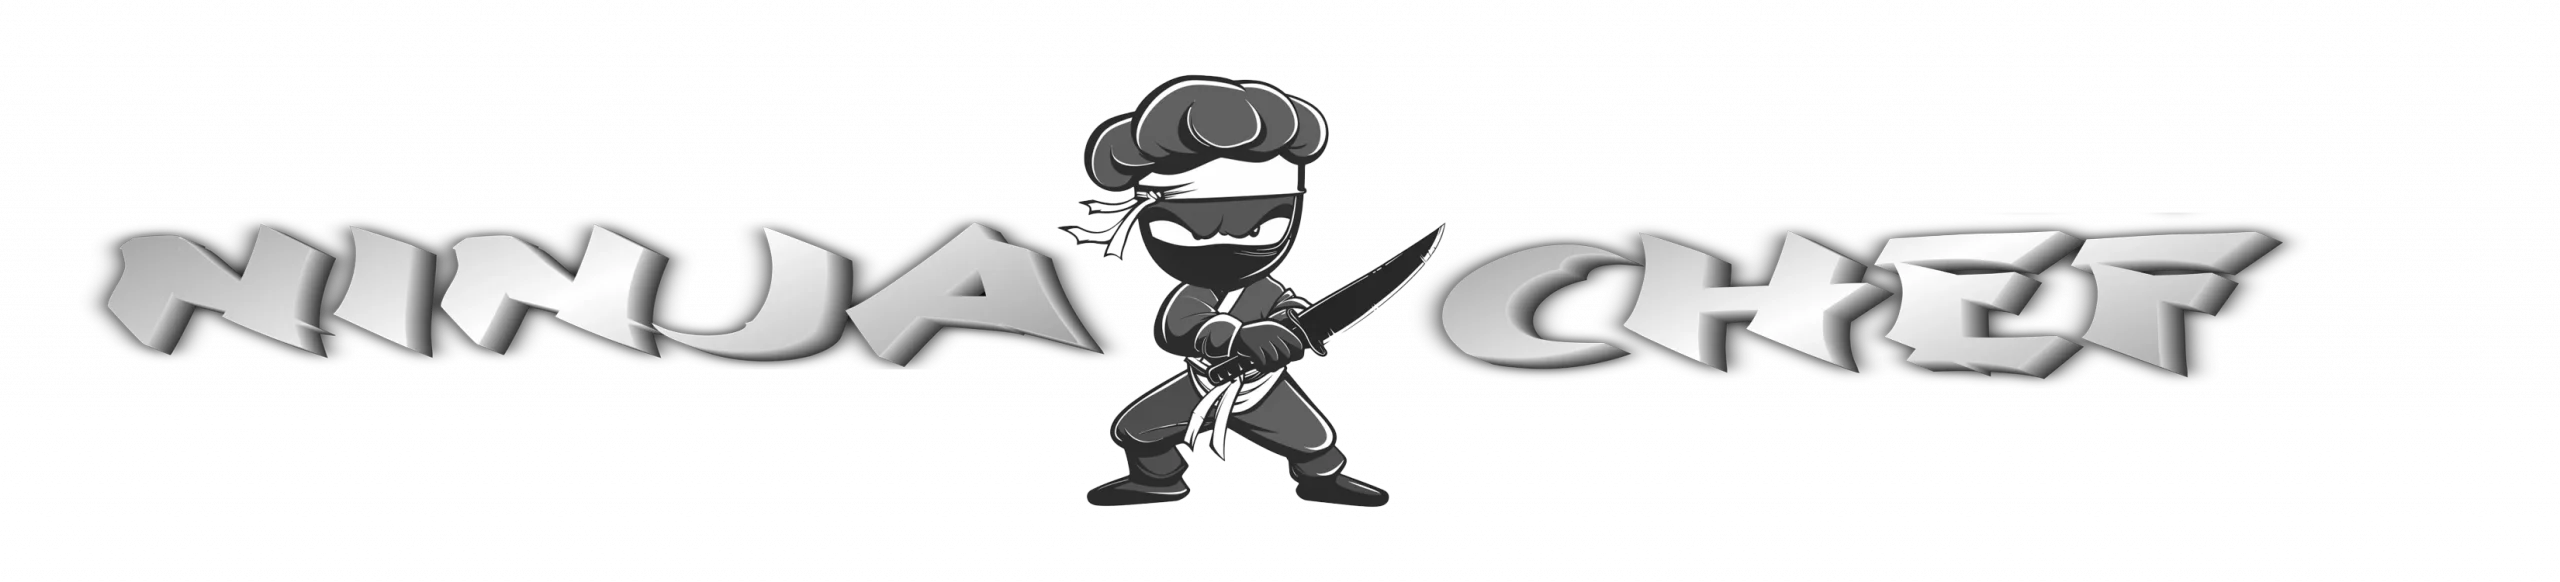 Ninja Chef Image